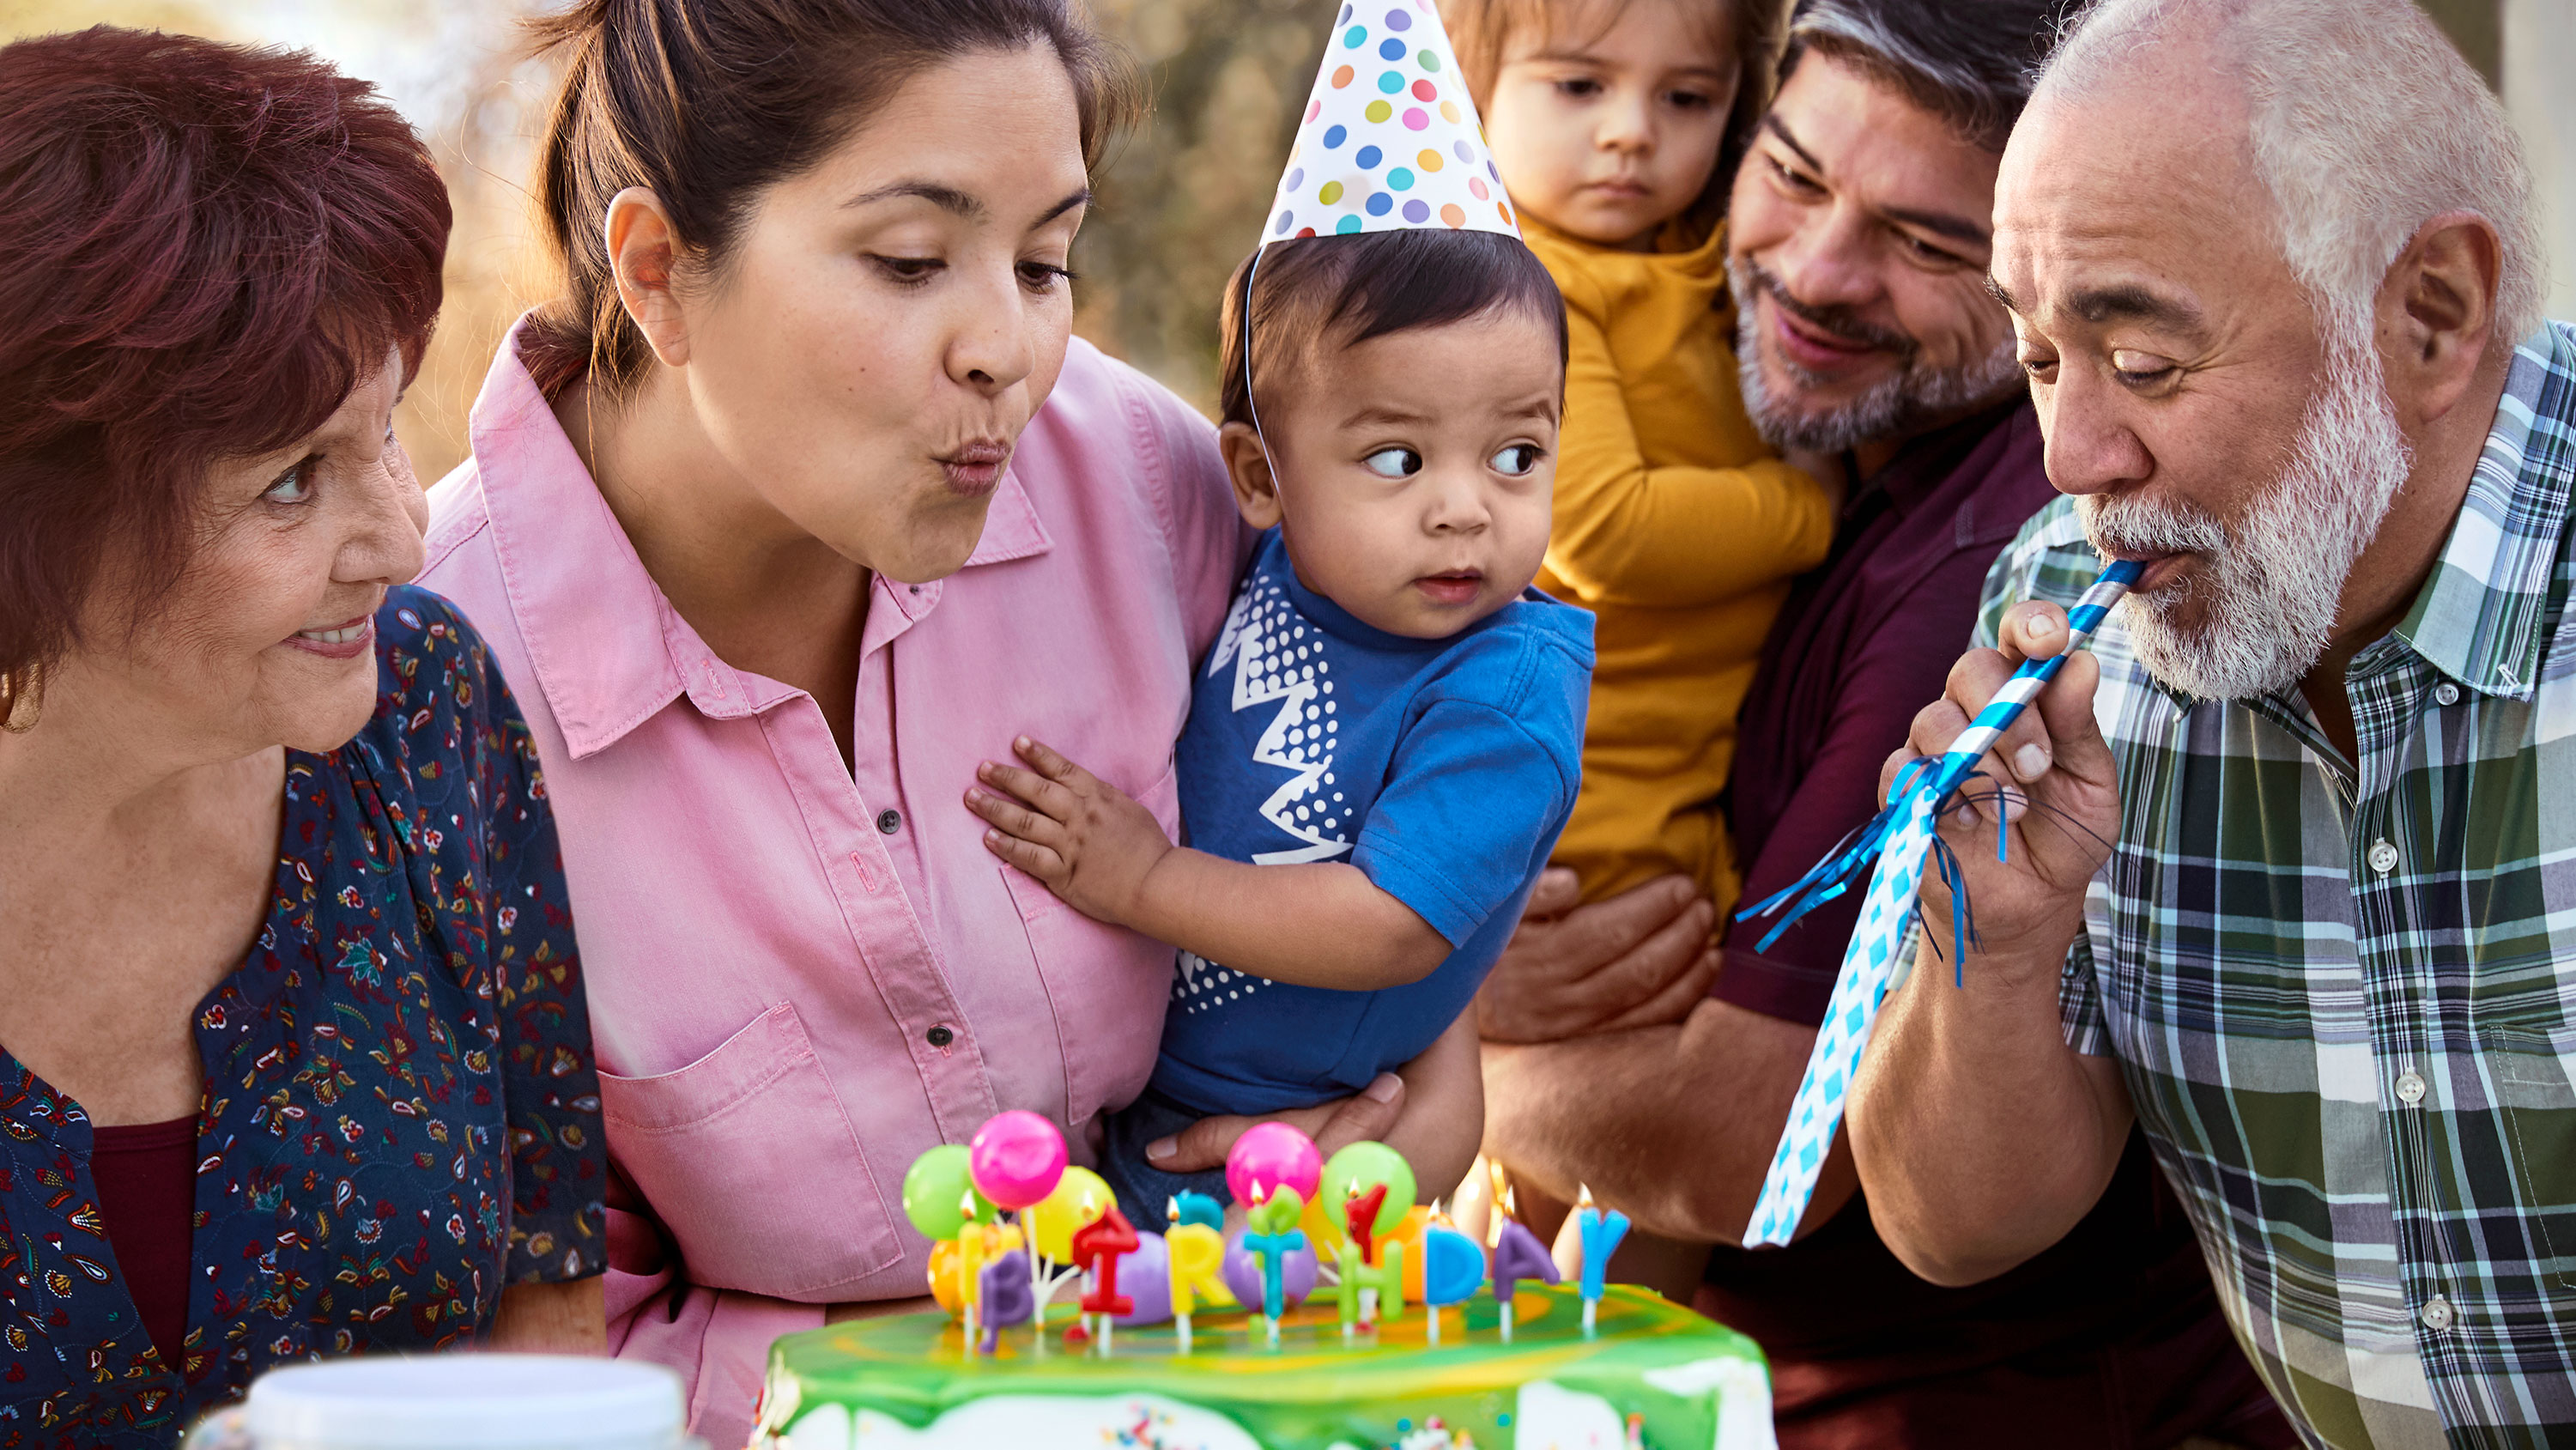 A Hispanic family shown celebrating a small child's birthday